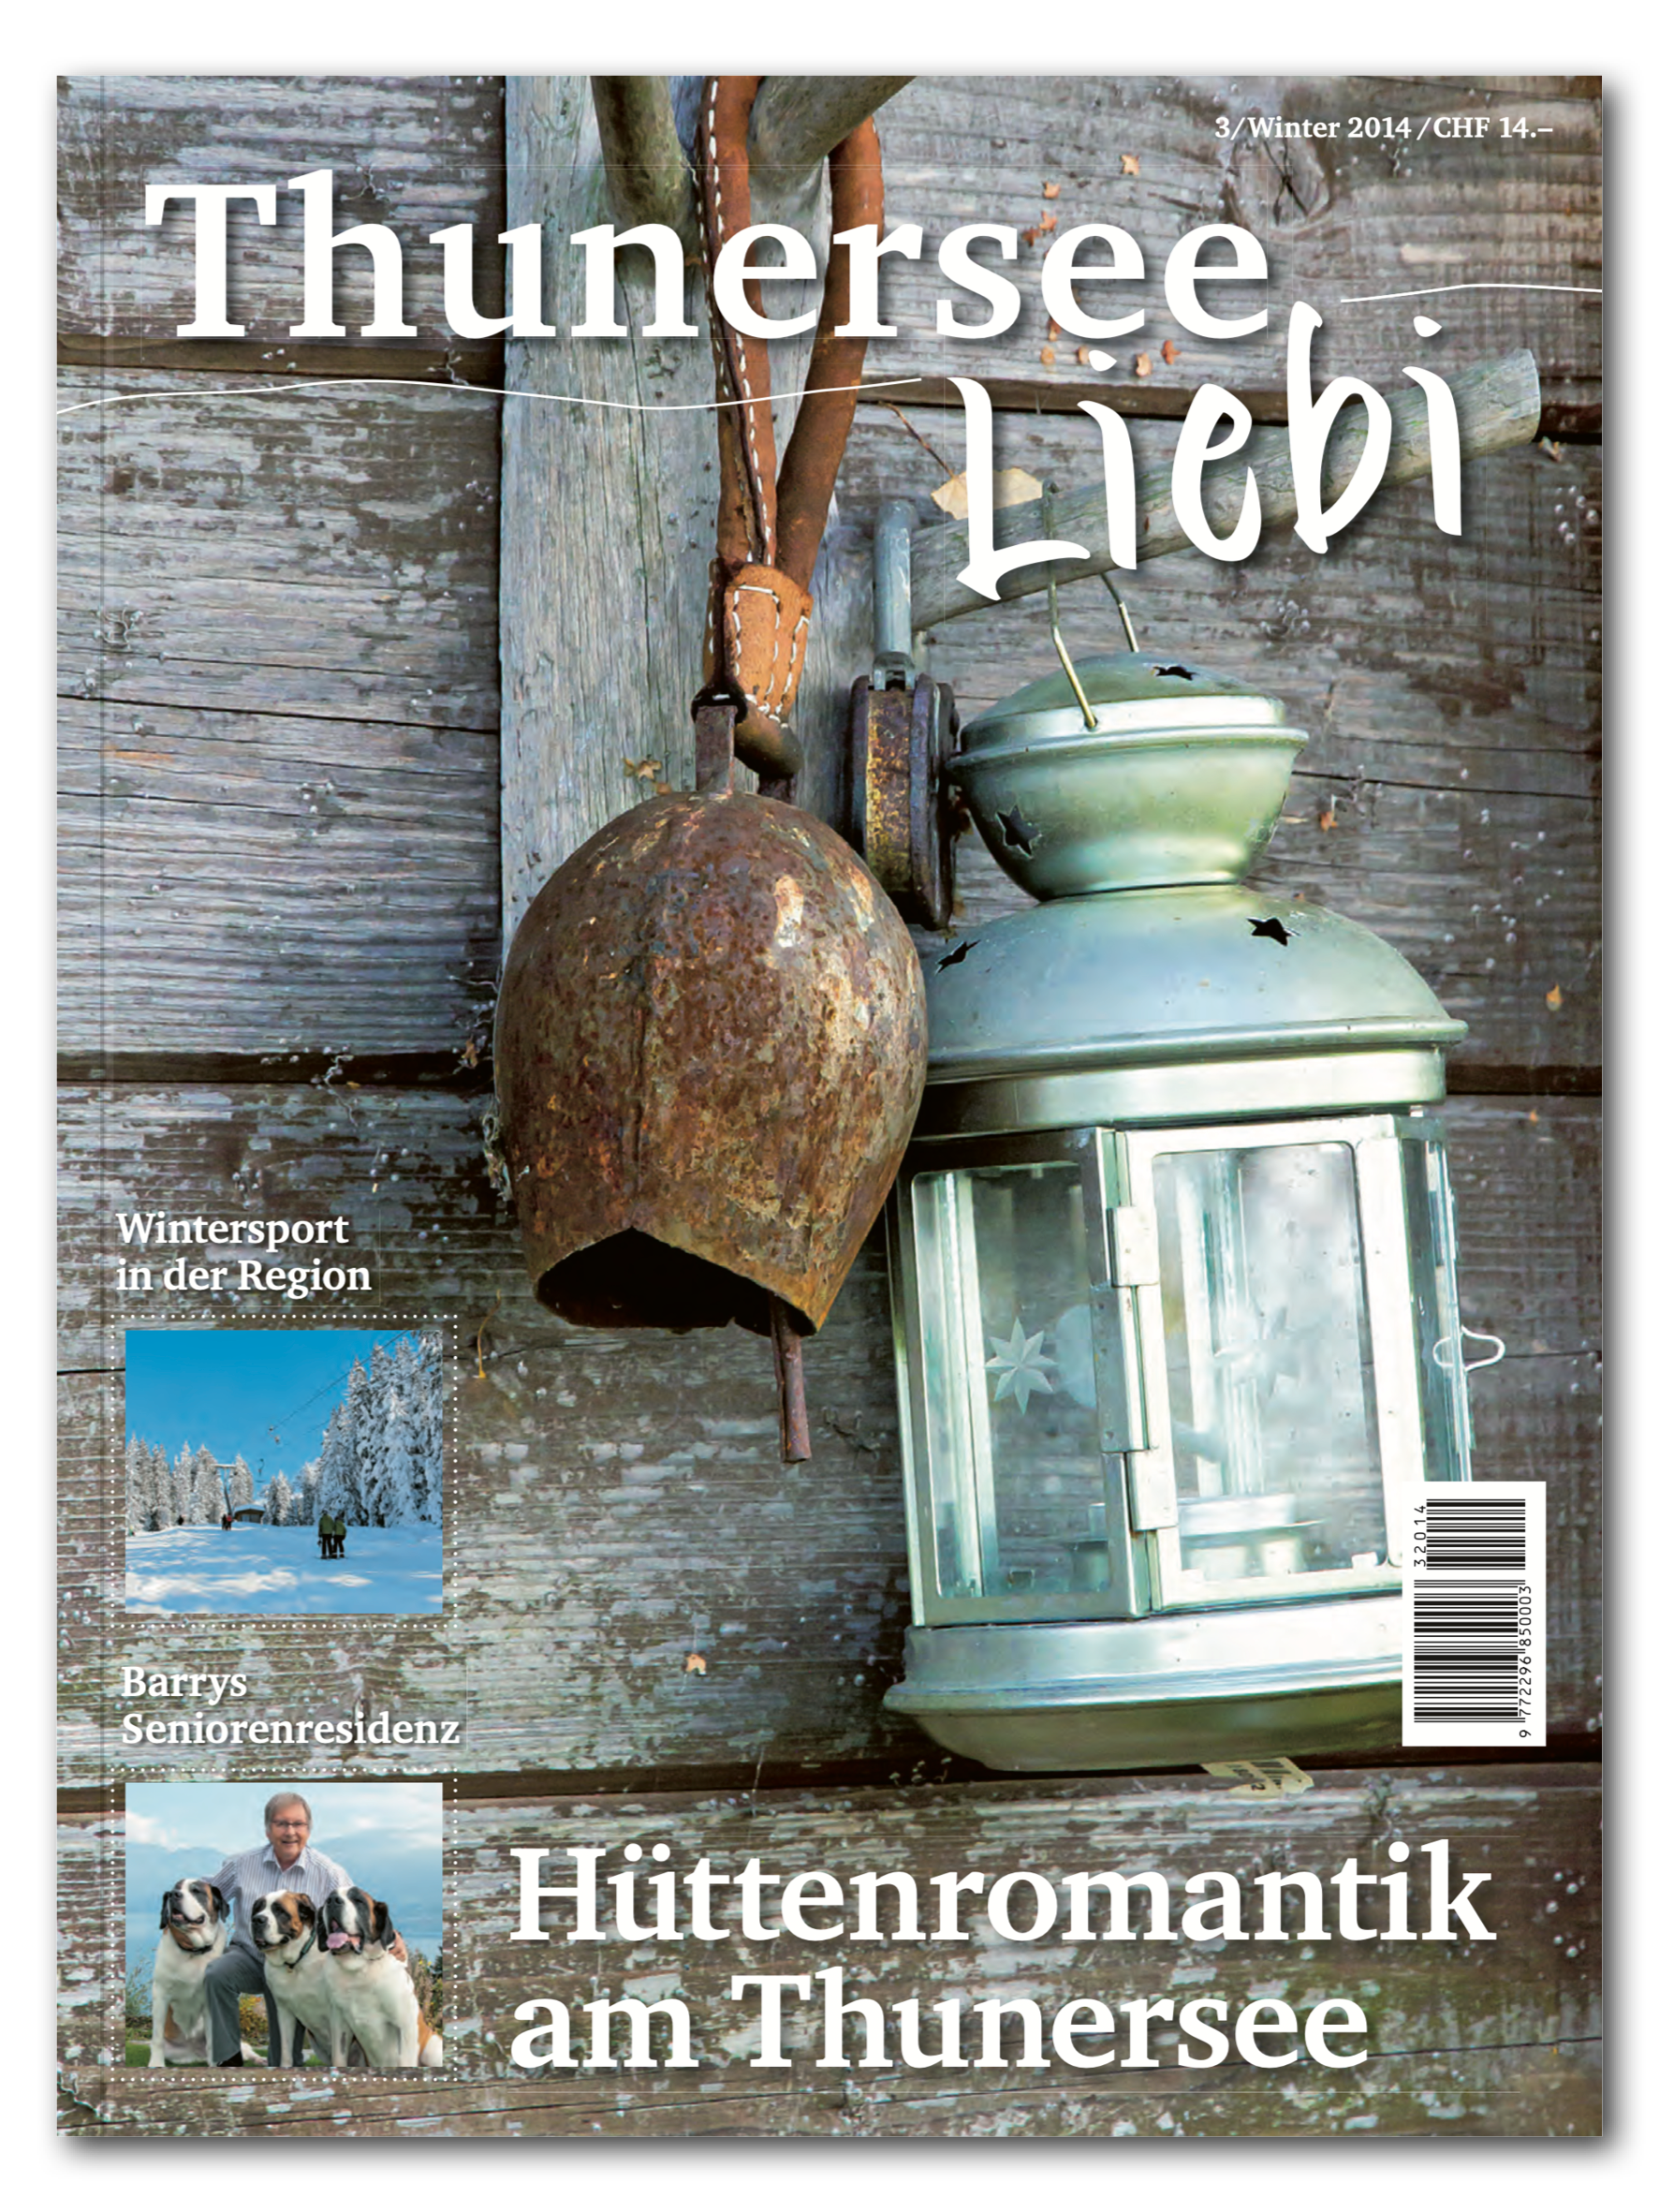 Einzelausgaben ThunerseeLiebi - • WEBER VERLAG